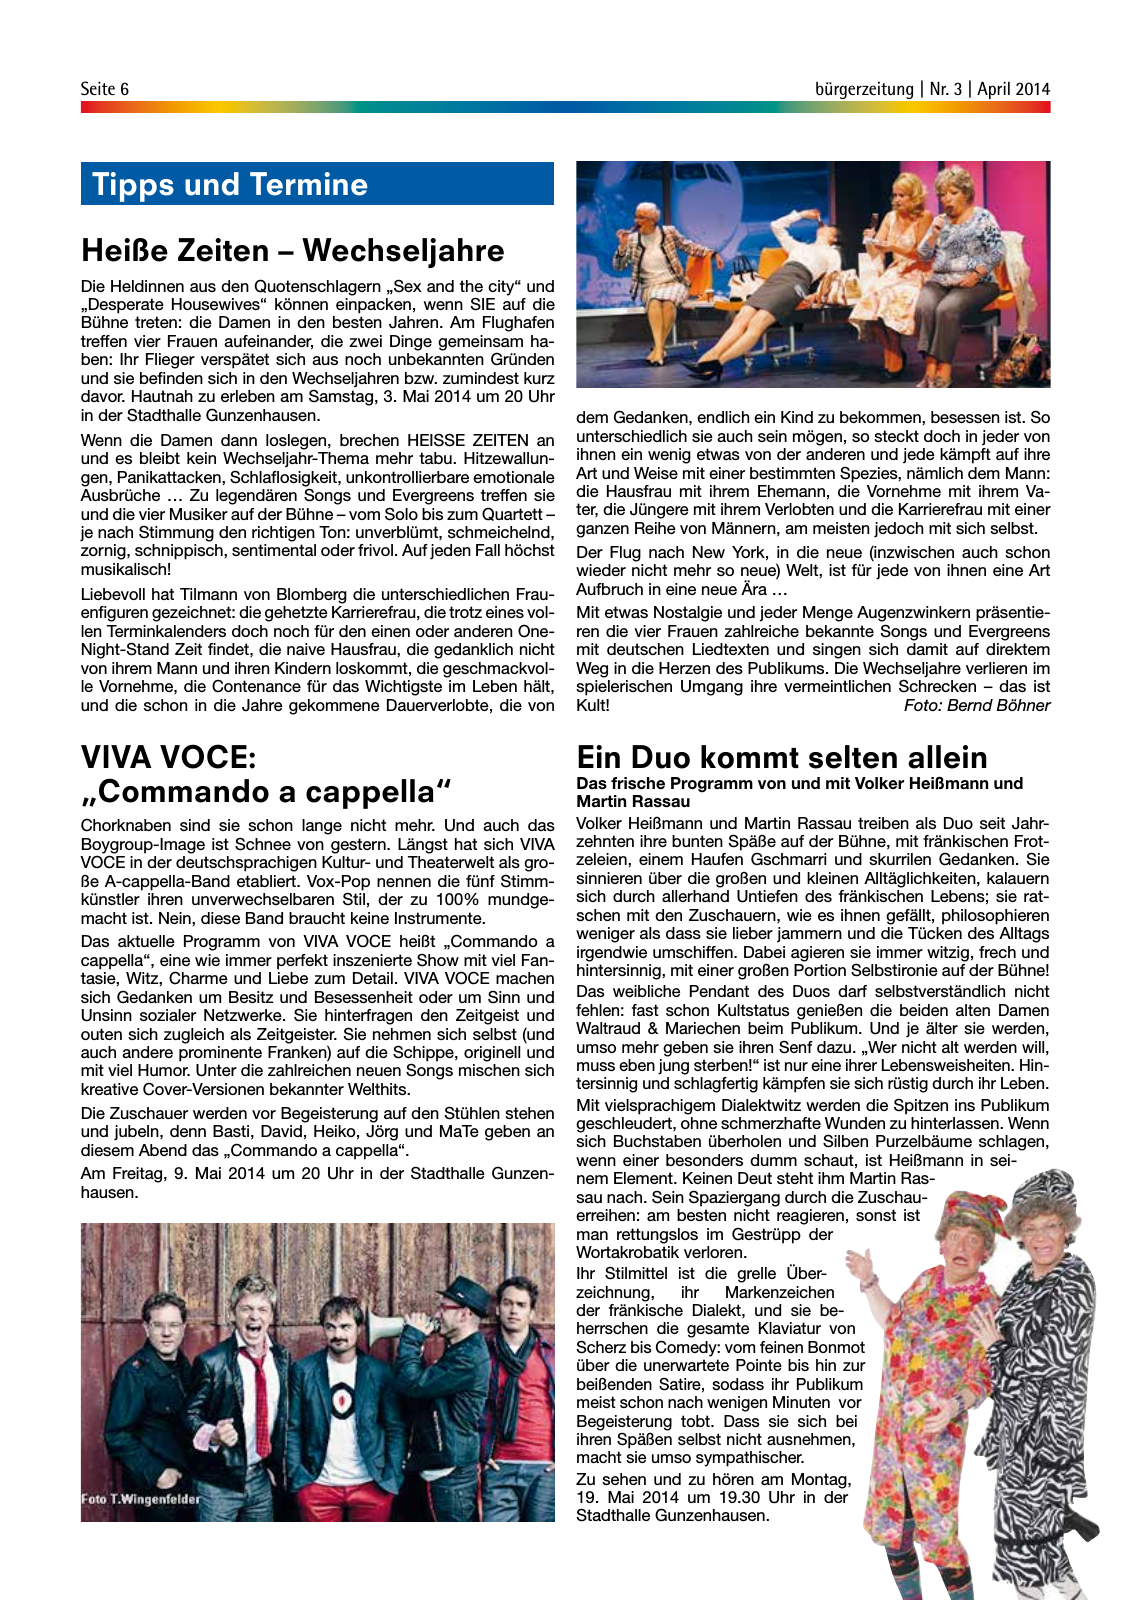 Vorschau StadtLandGUN Gunzenhäuser Bürgerzeitung Nr. 3 | April 2014 Seite 6